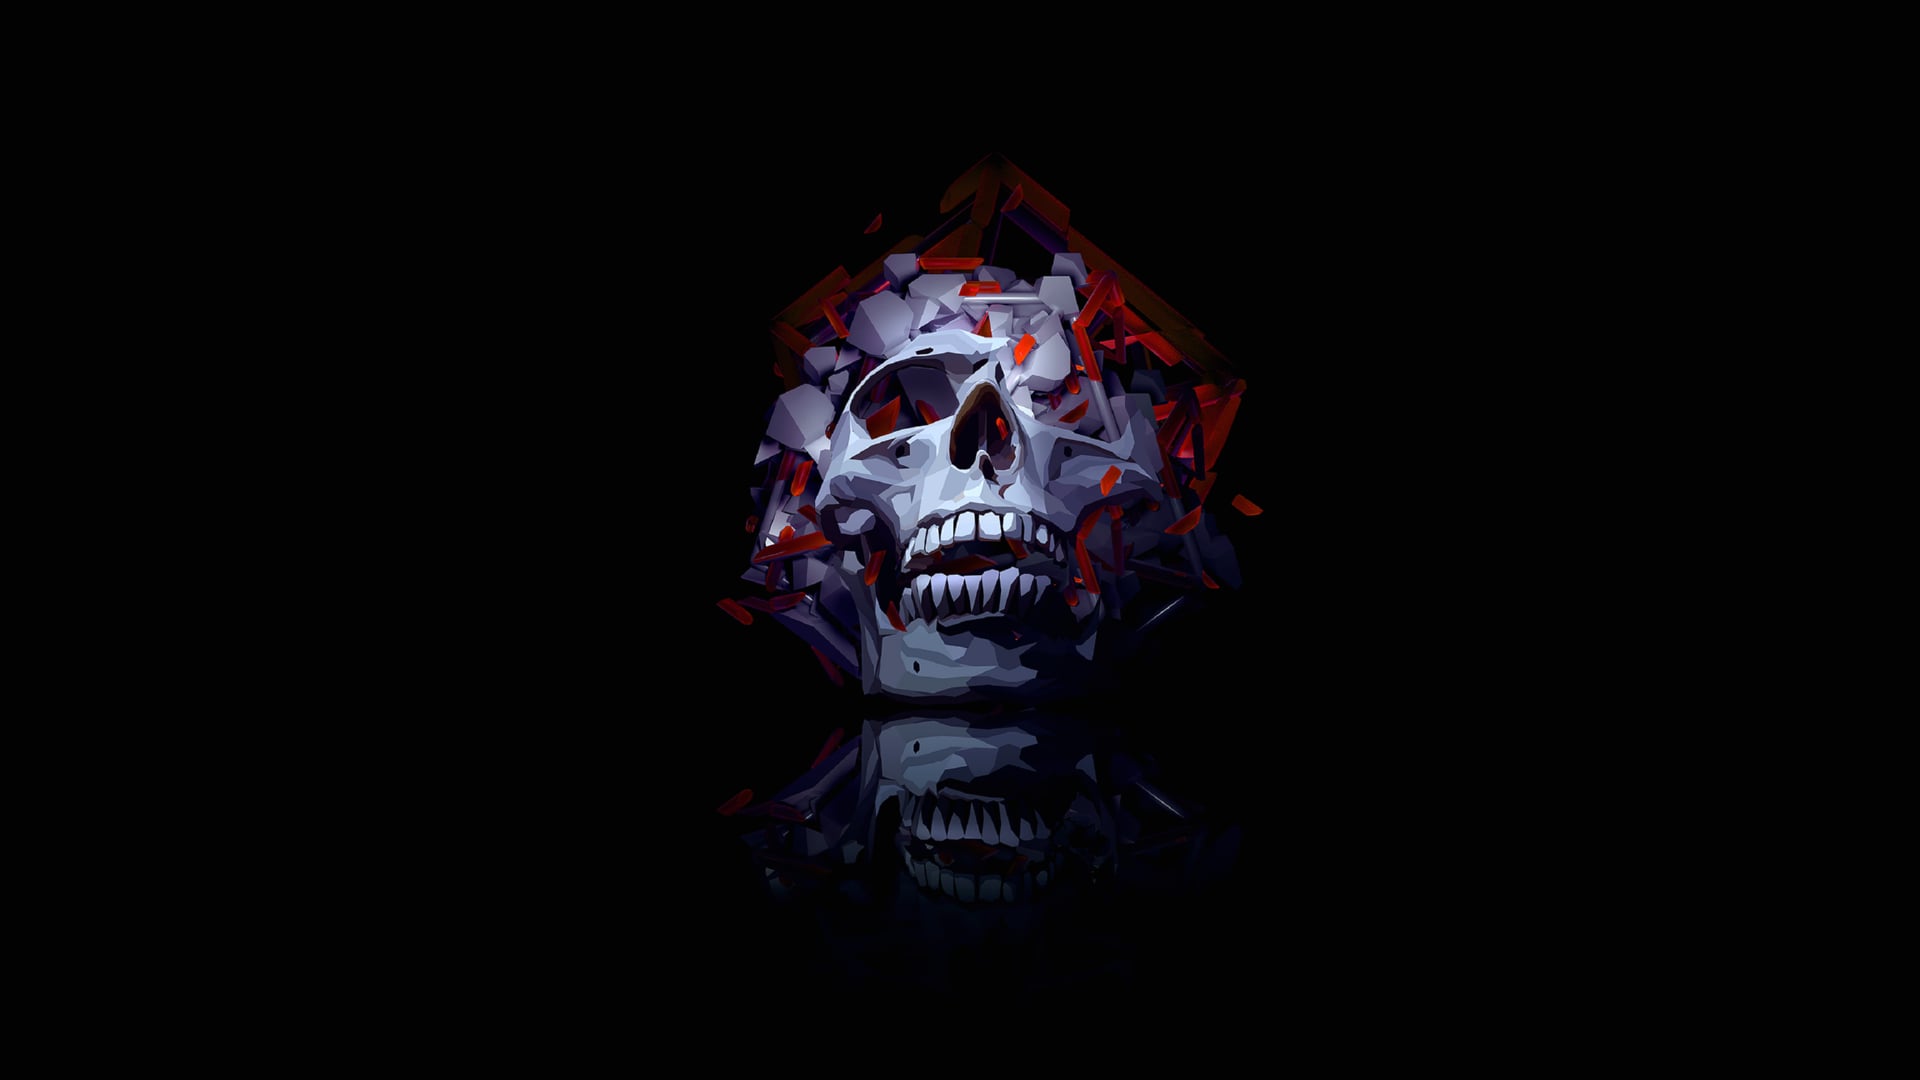 Digital Art Skull at 1280 x 960 size wallpapers HD quality